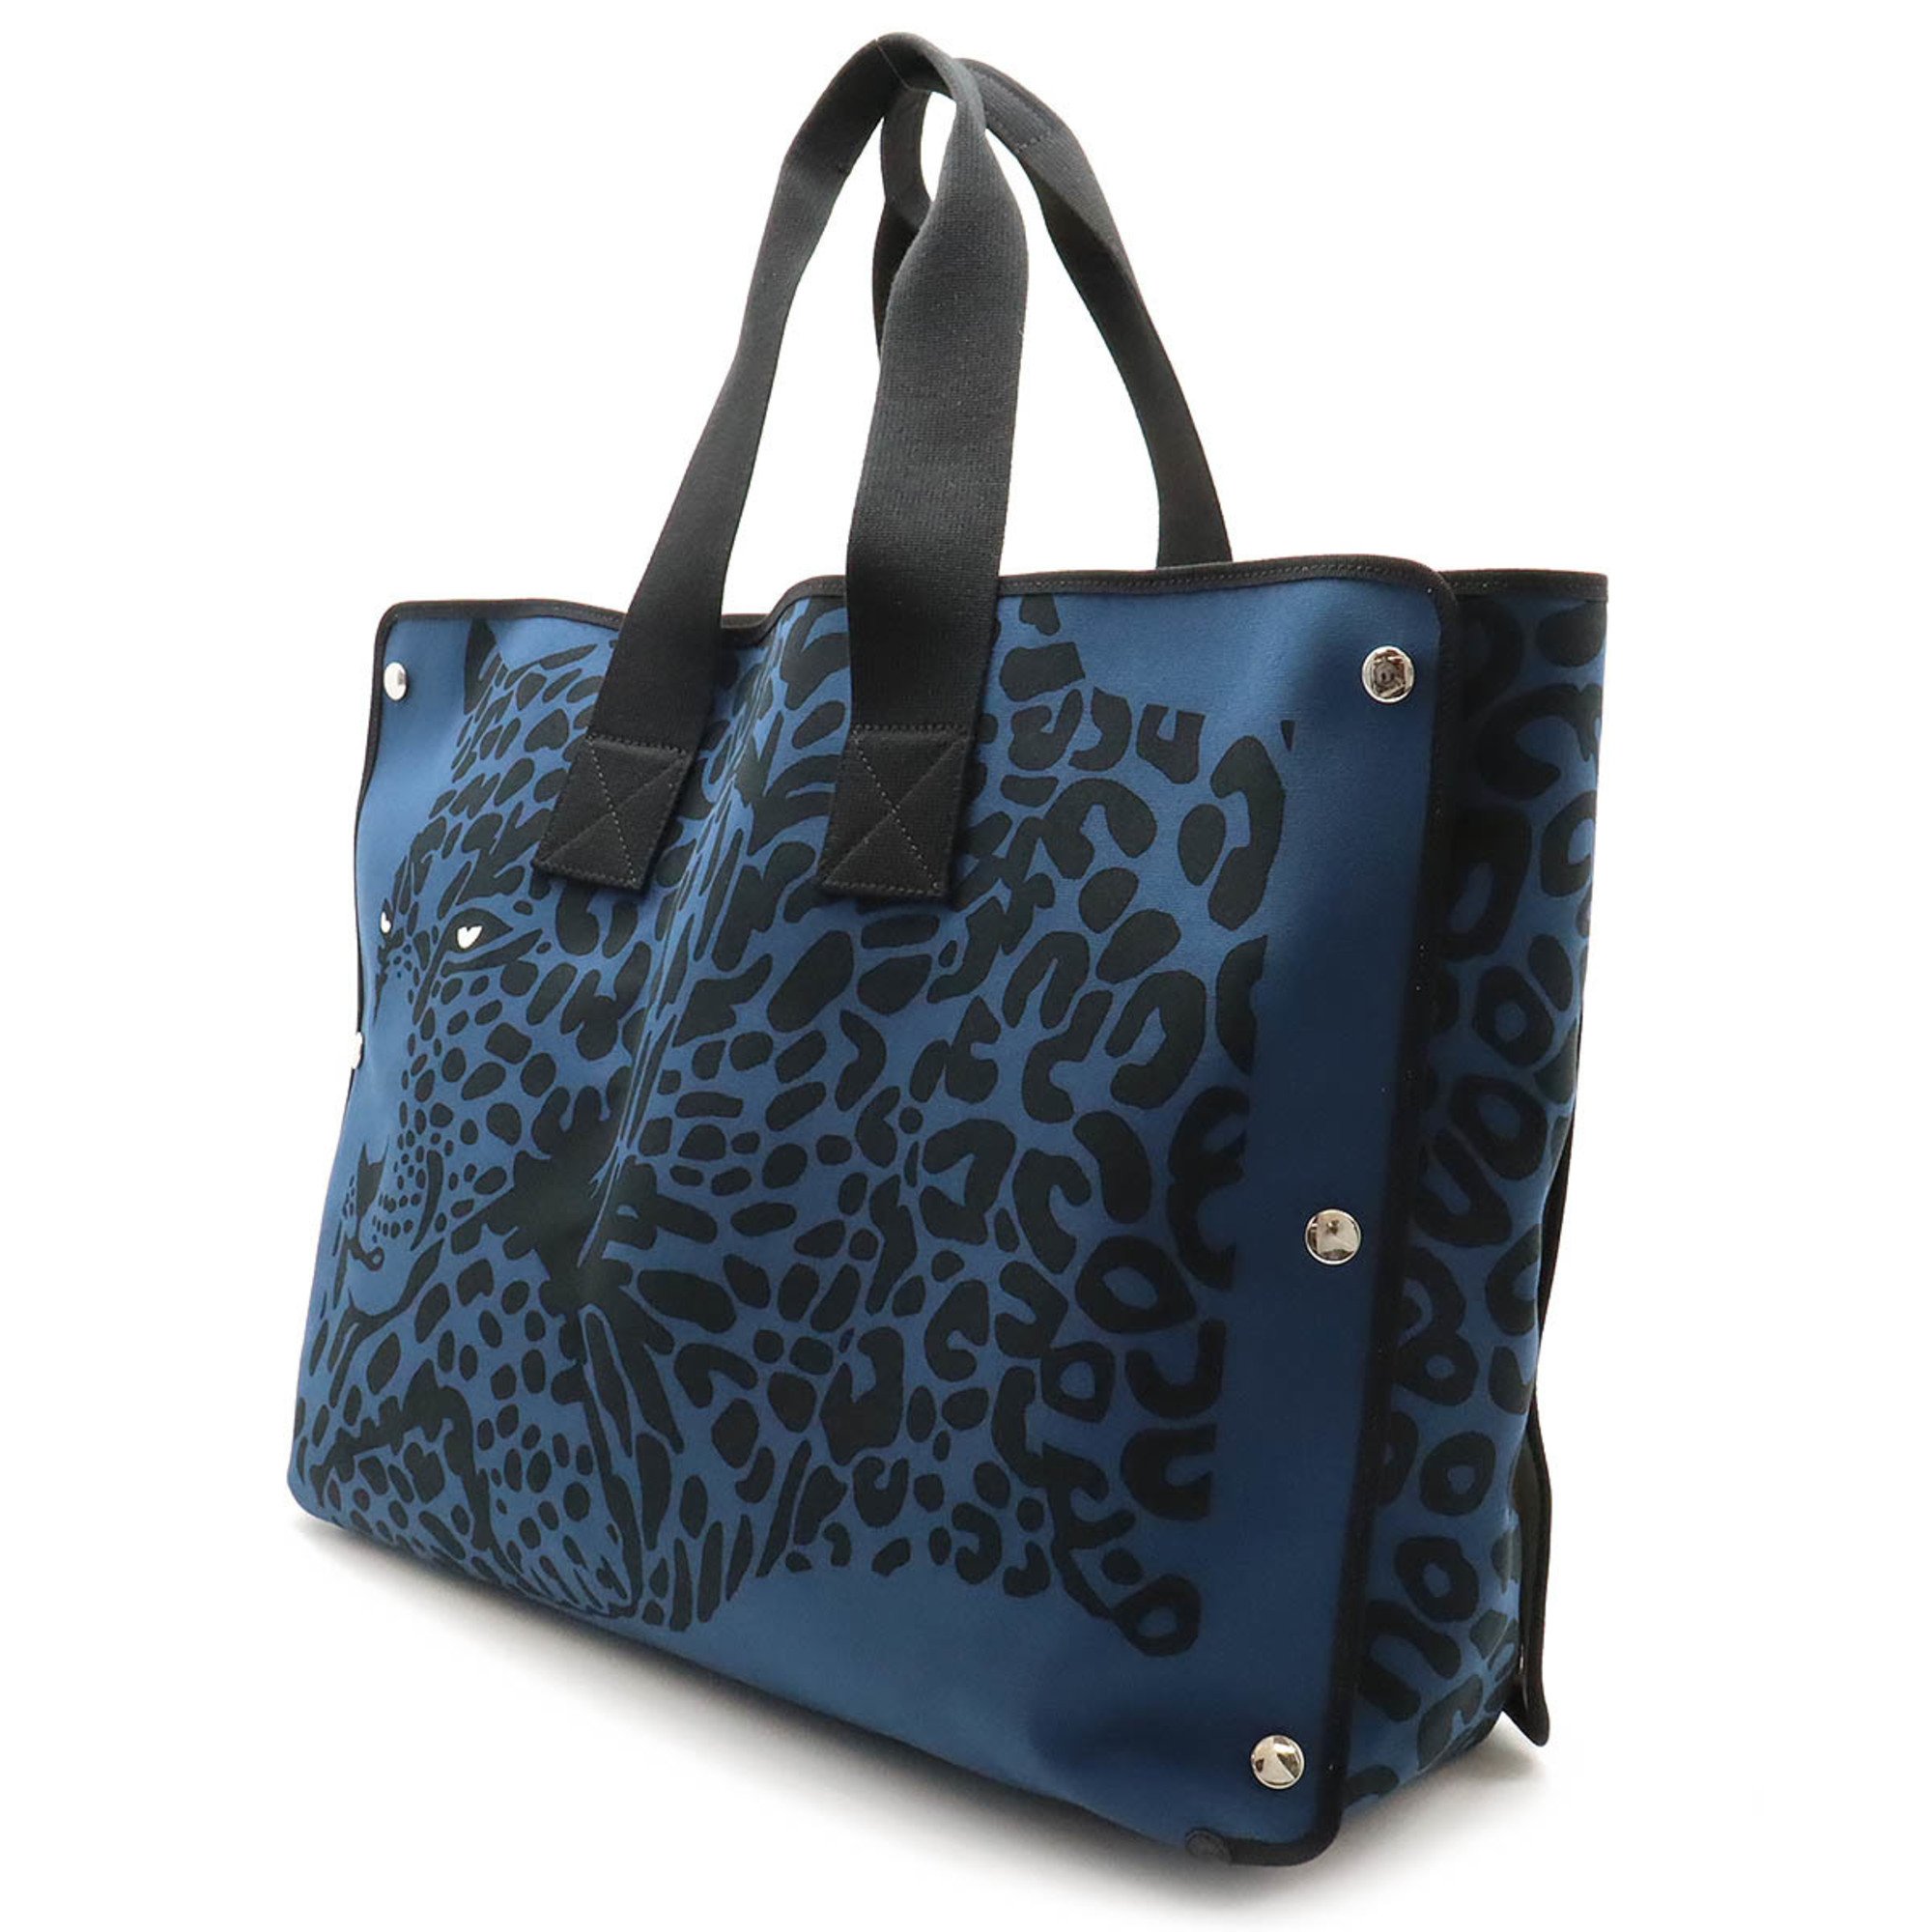 HERMES Hermes Beach Tote Leopard Bag Canvas Blue Black